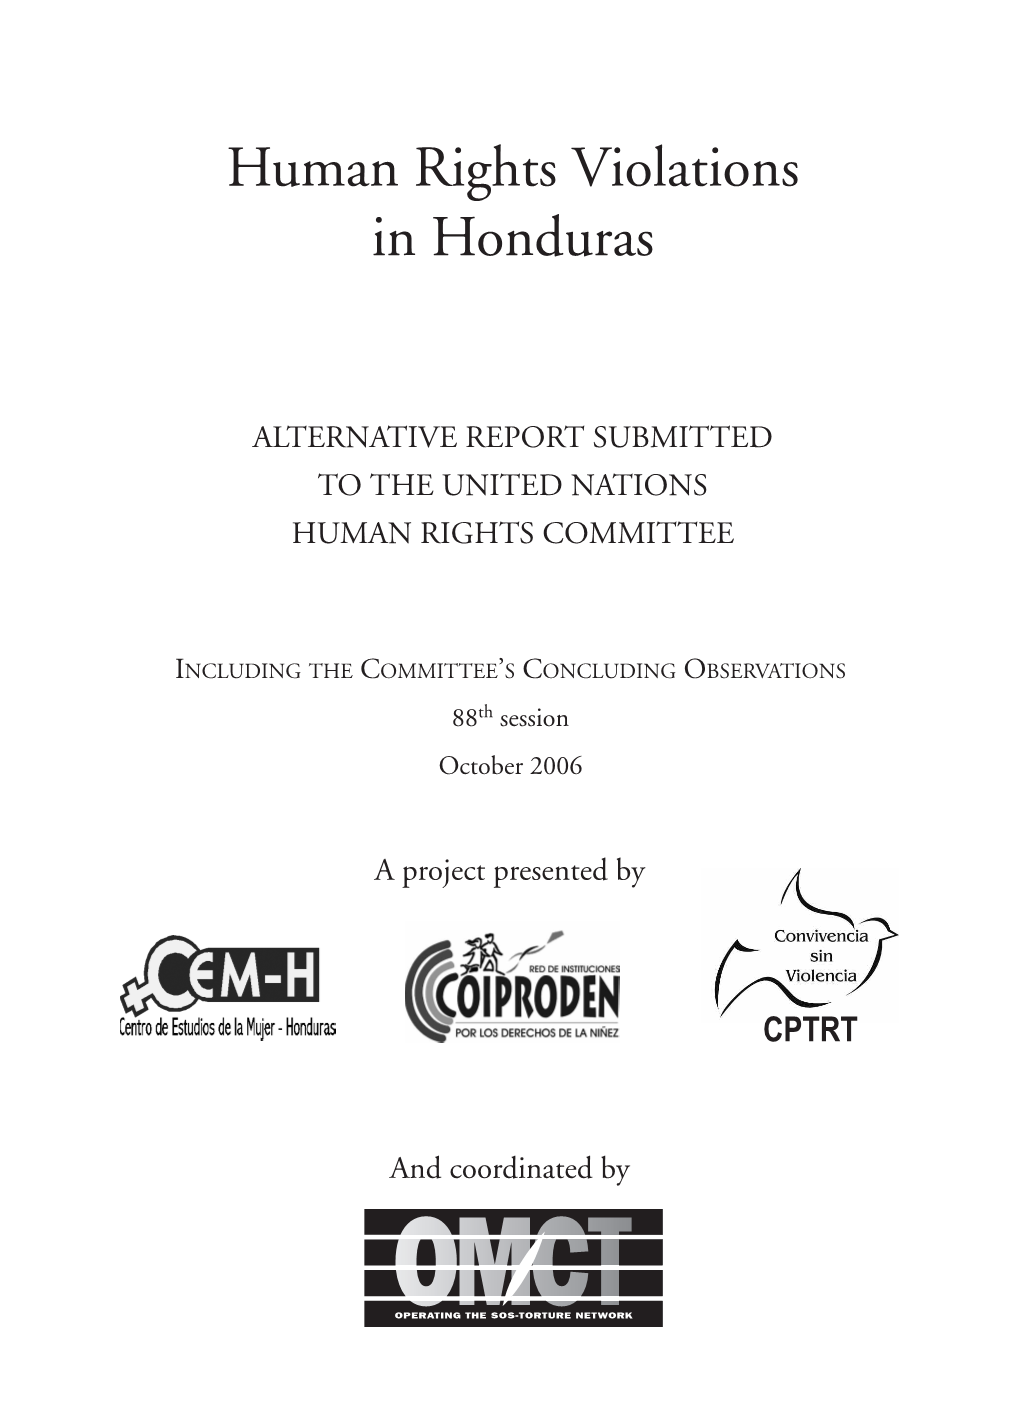 Human Rights Violations in Honduras